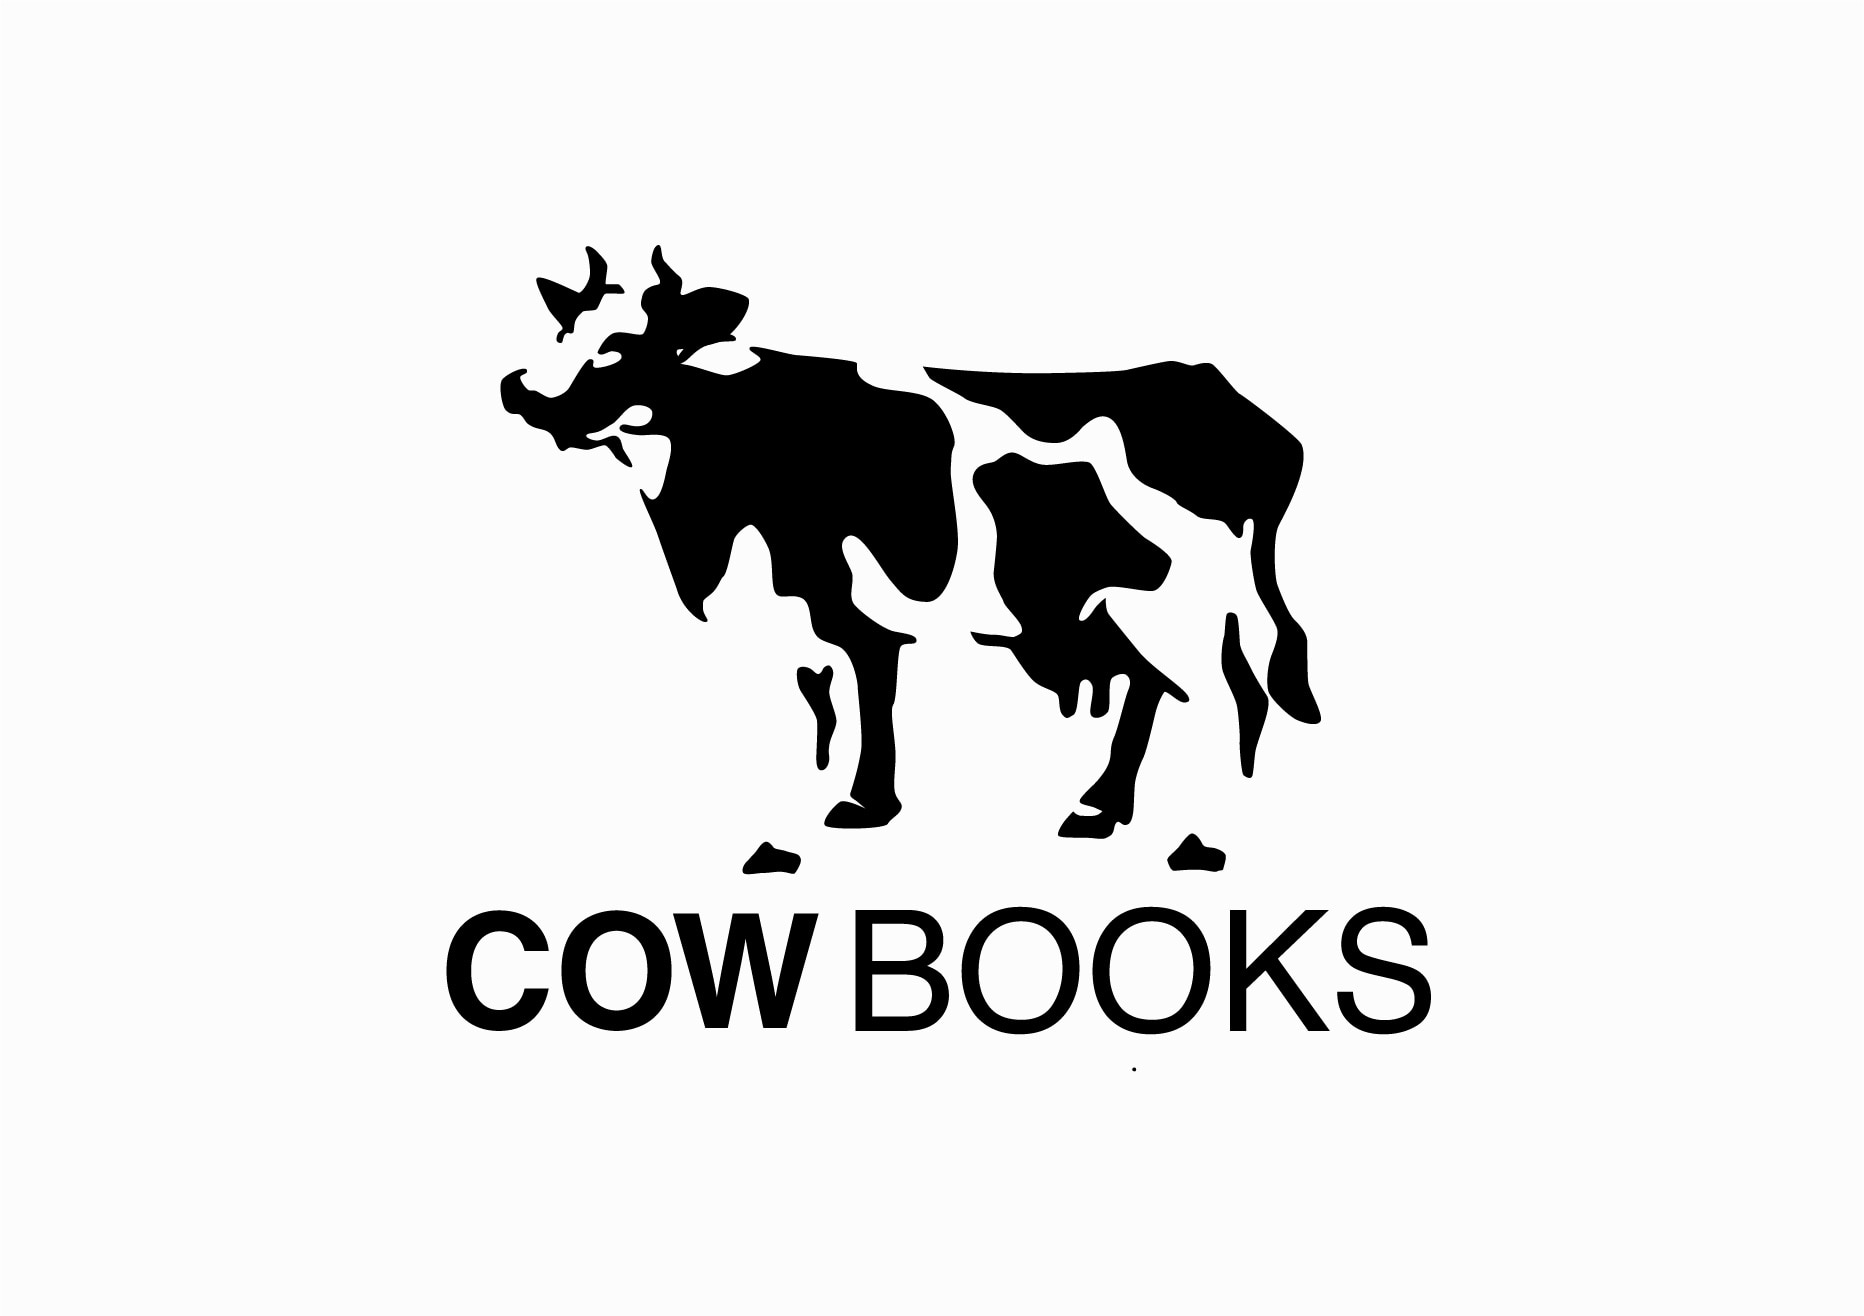 “cowbooks.”